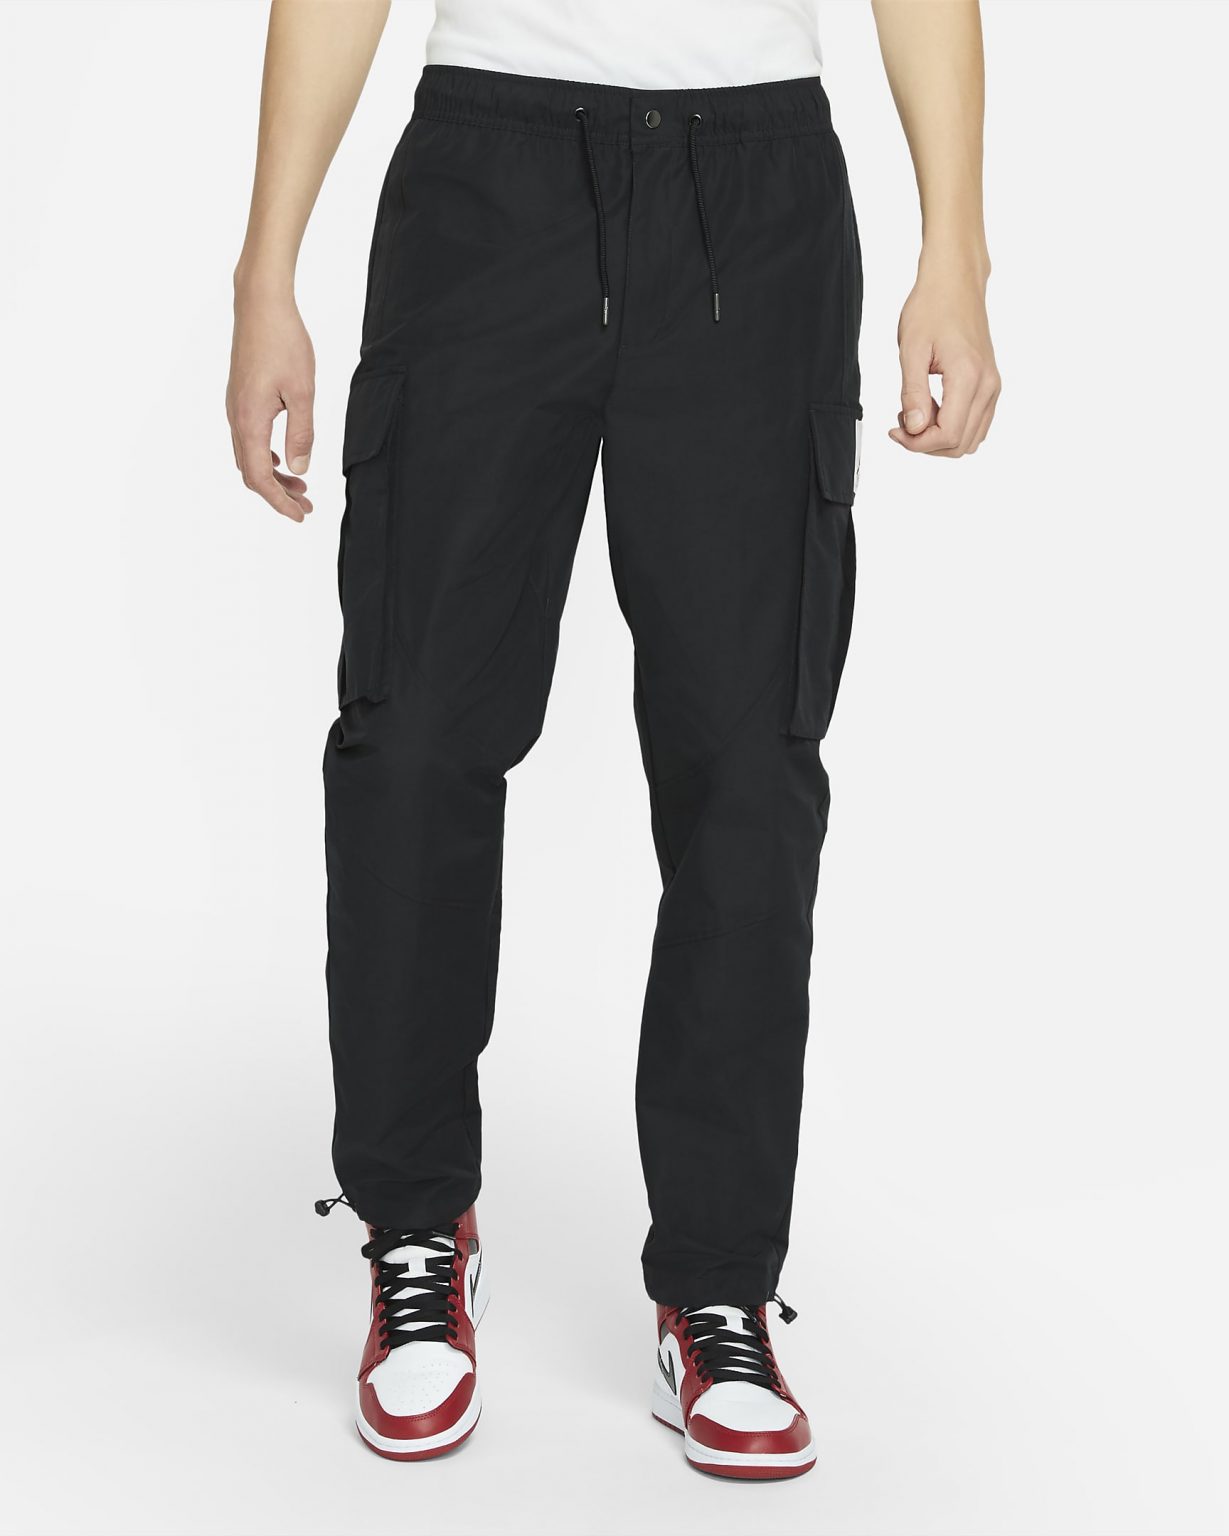 Jordan Flight Woven Black Cargo Pants | SneakerFits.com